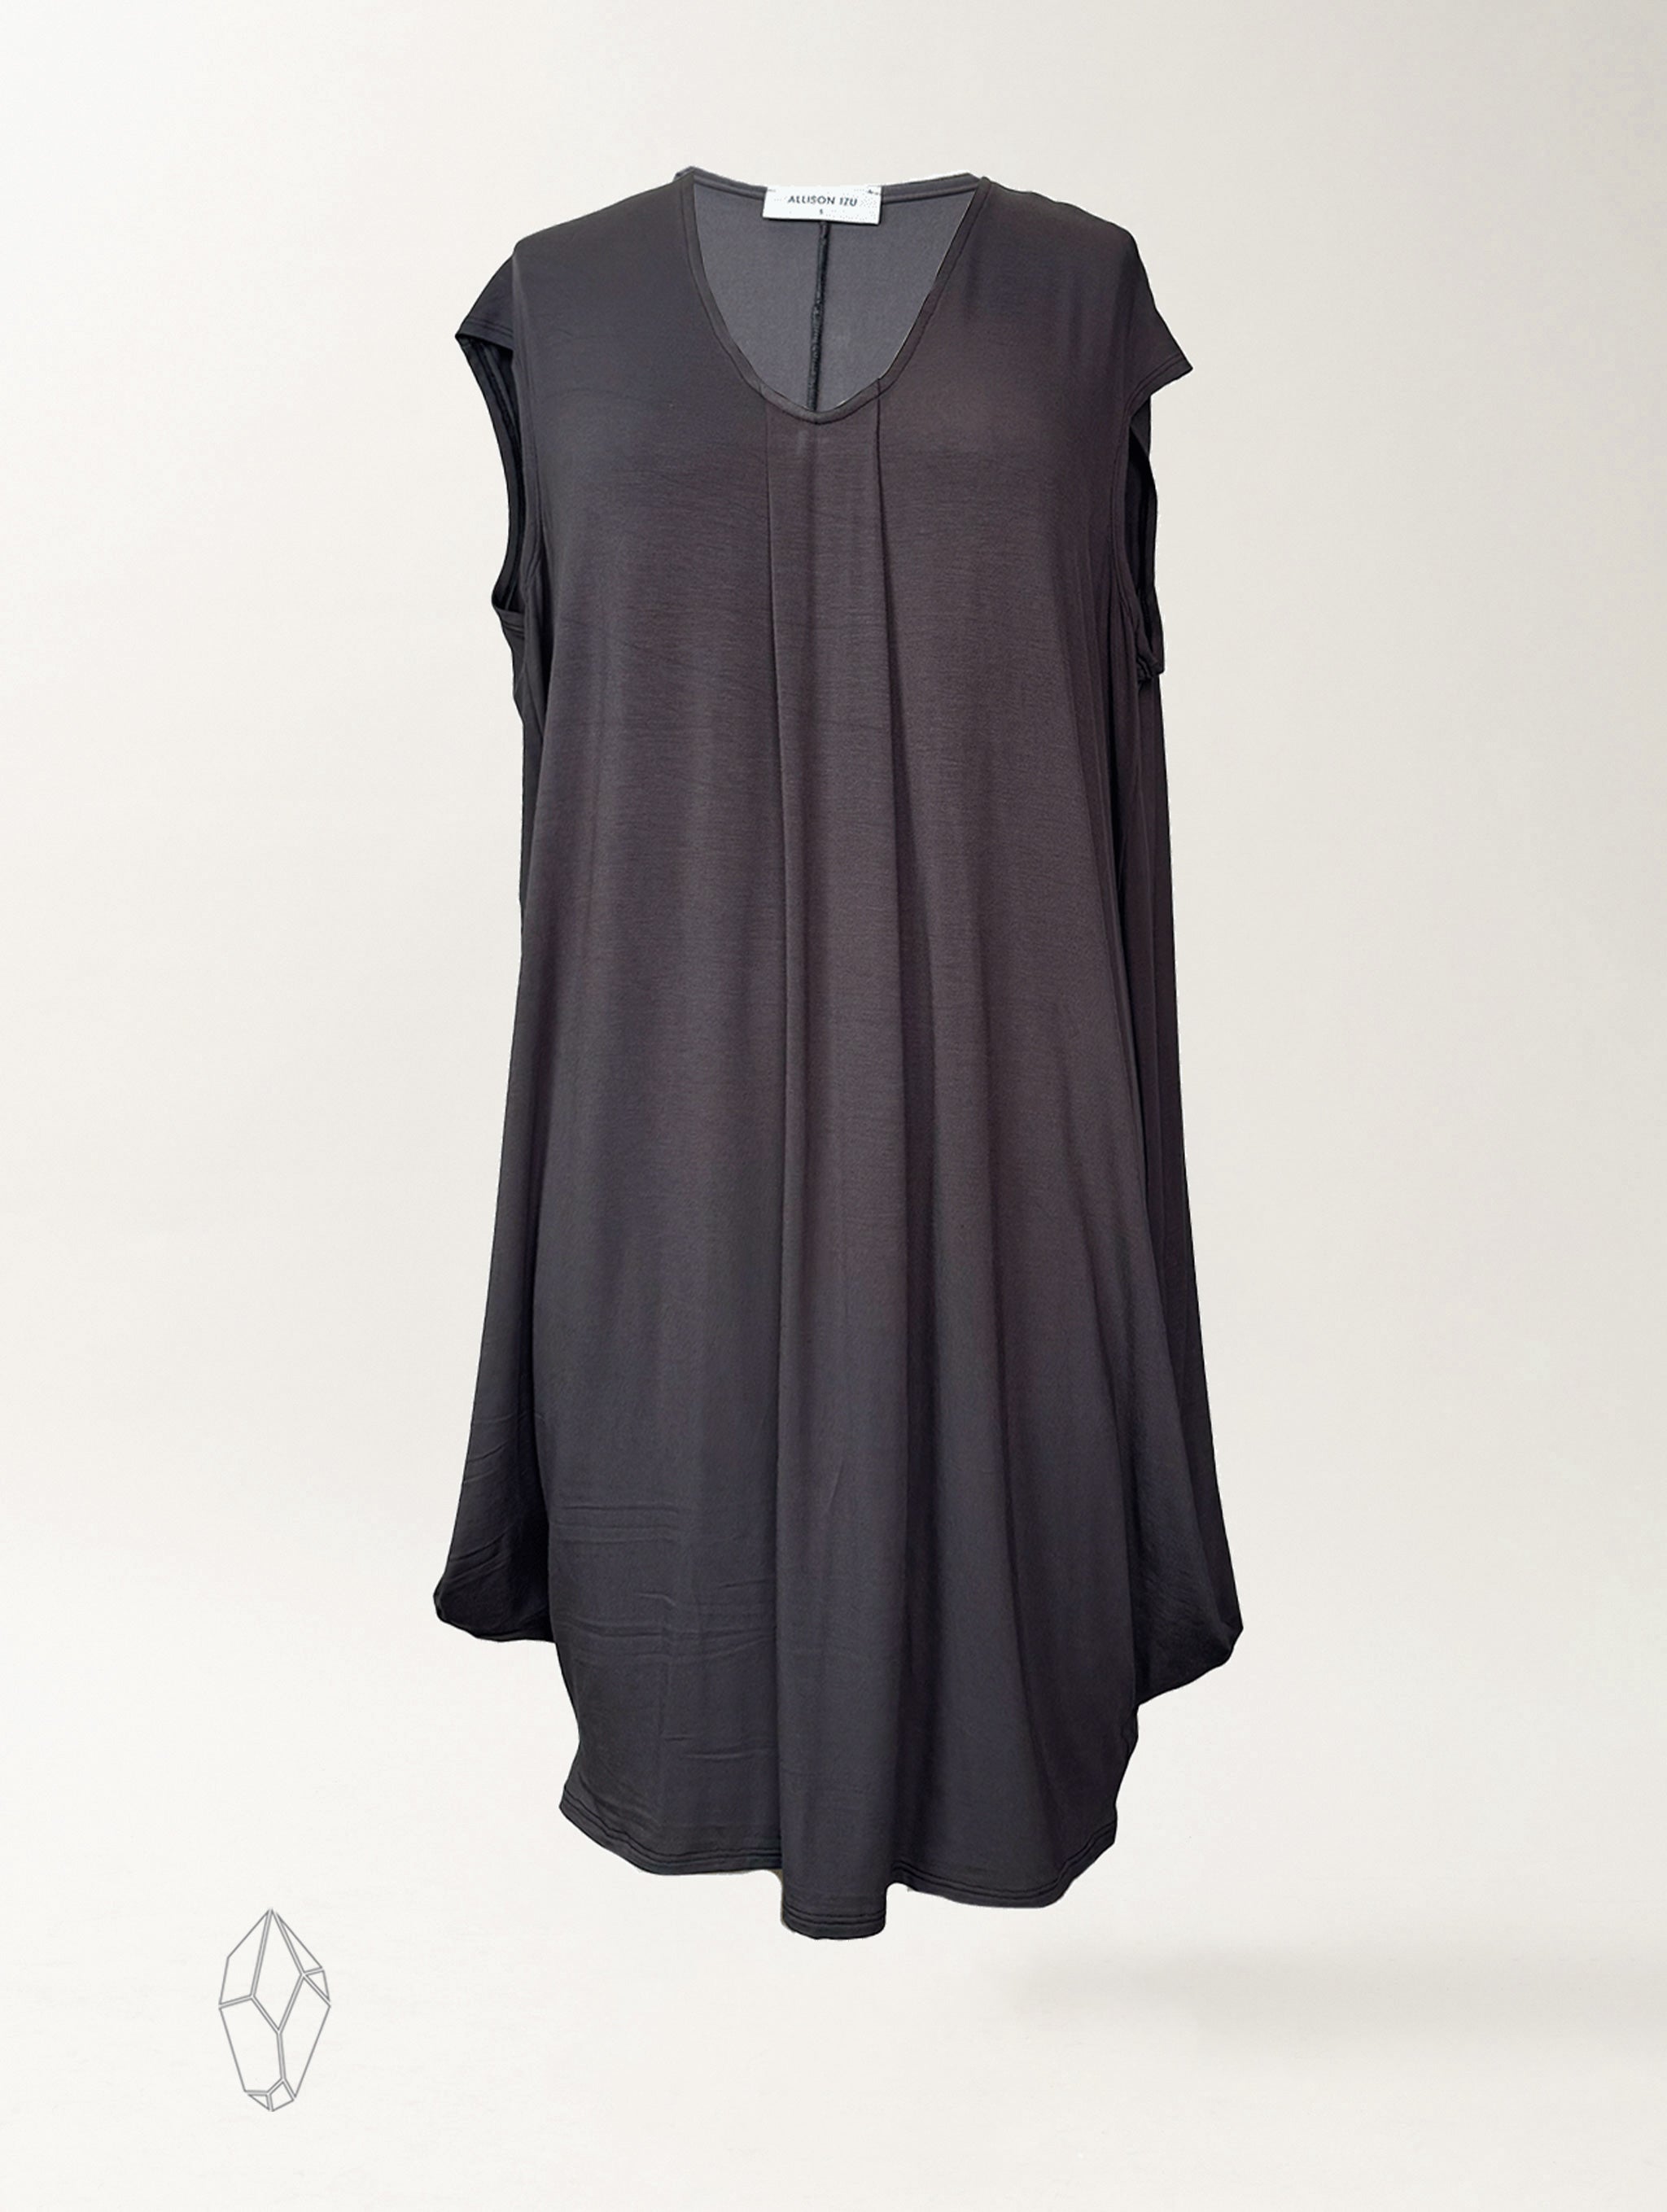 Natasha Dress - Washed Black Rayon Jersey